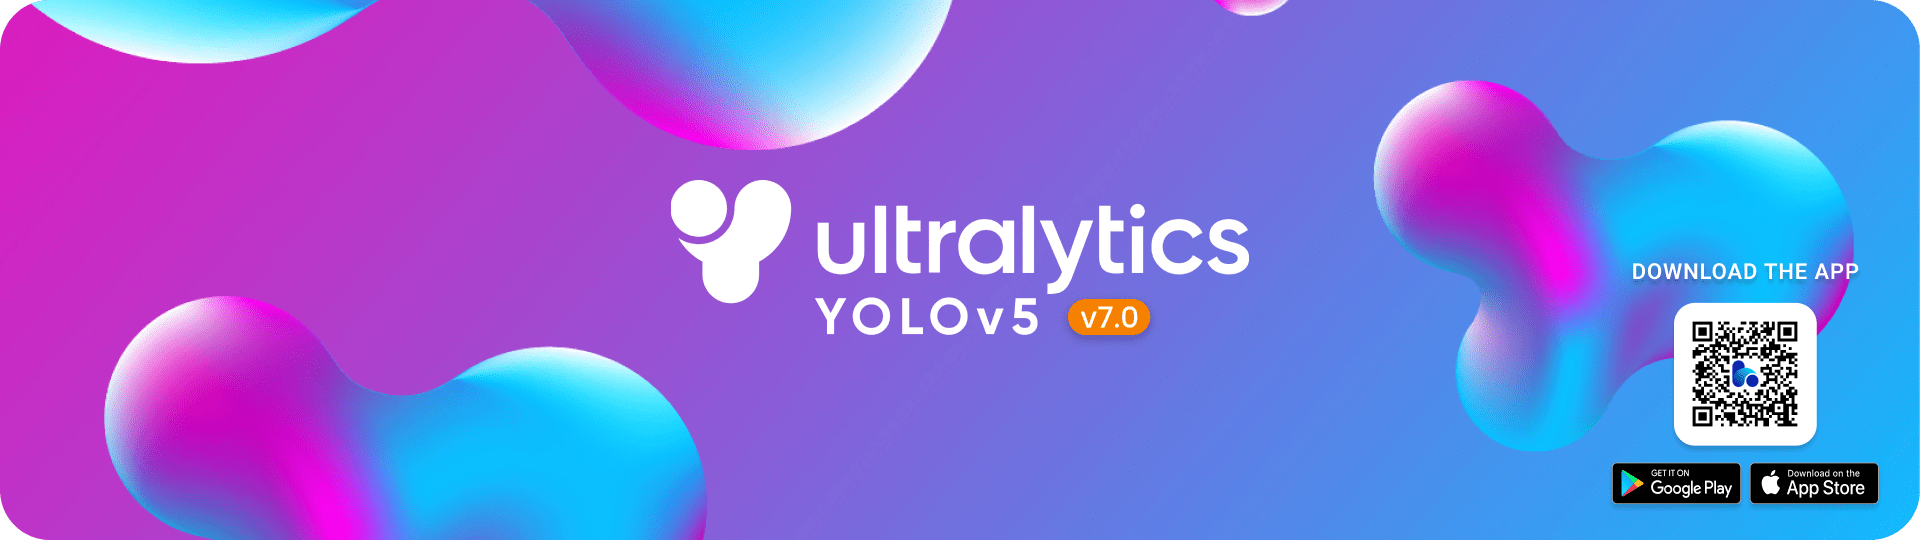 Ultralytics YOLOv5 v7.0 배너